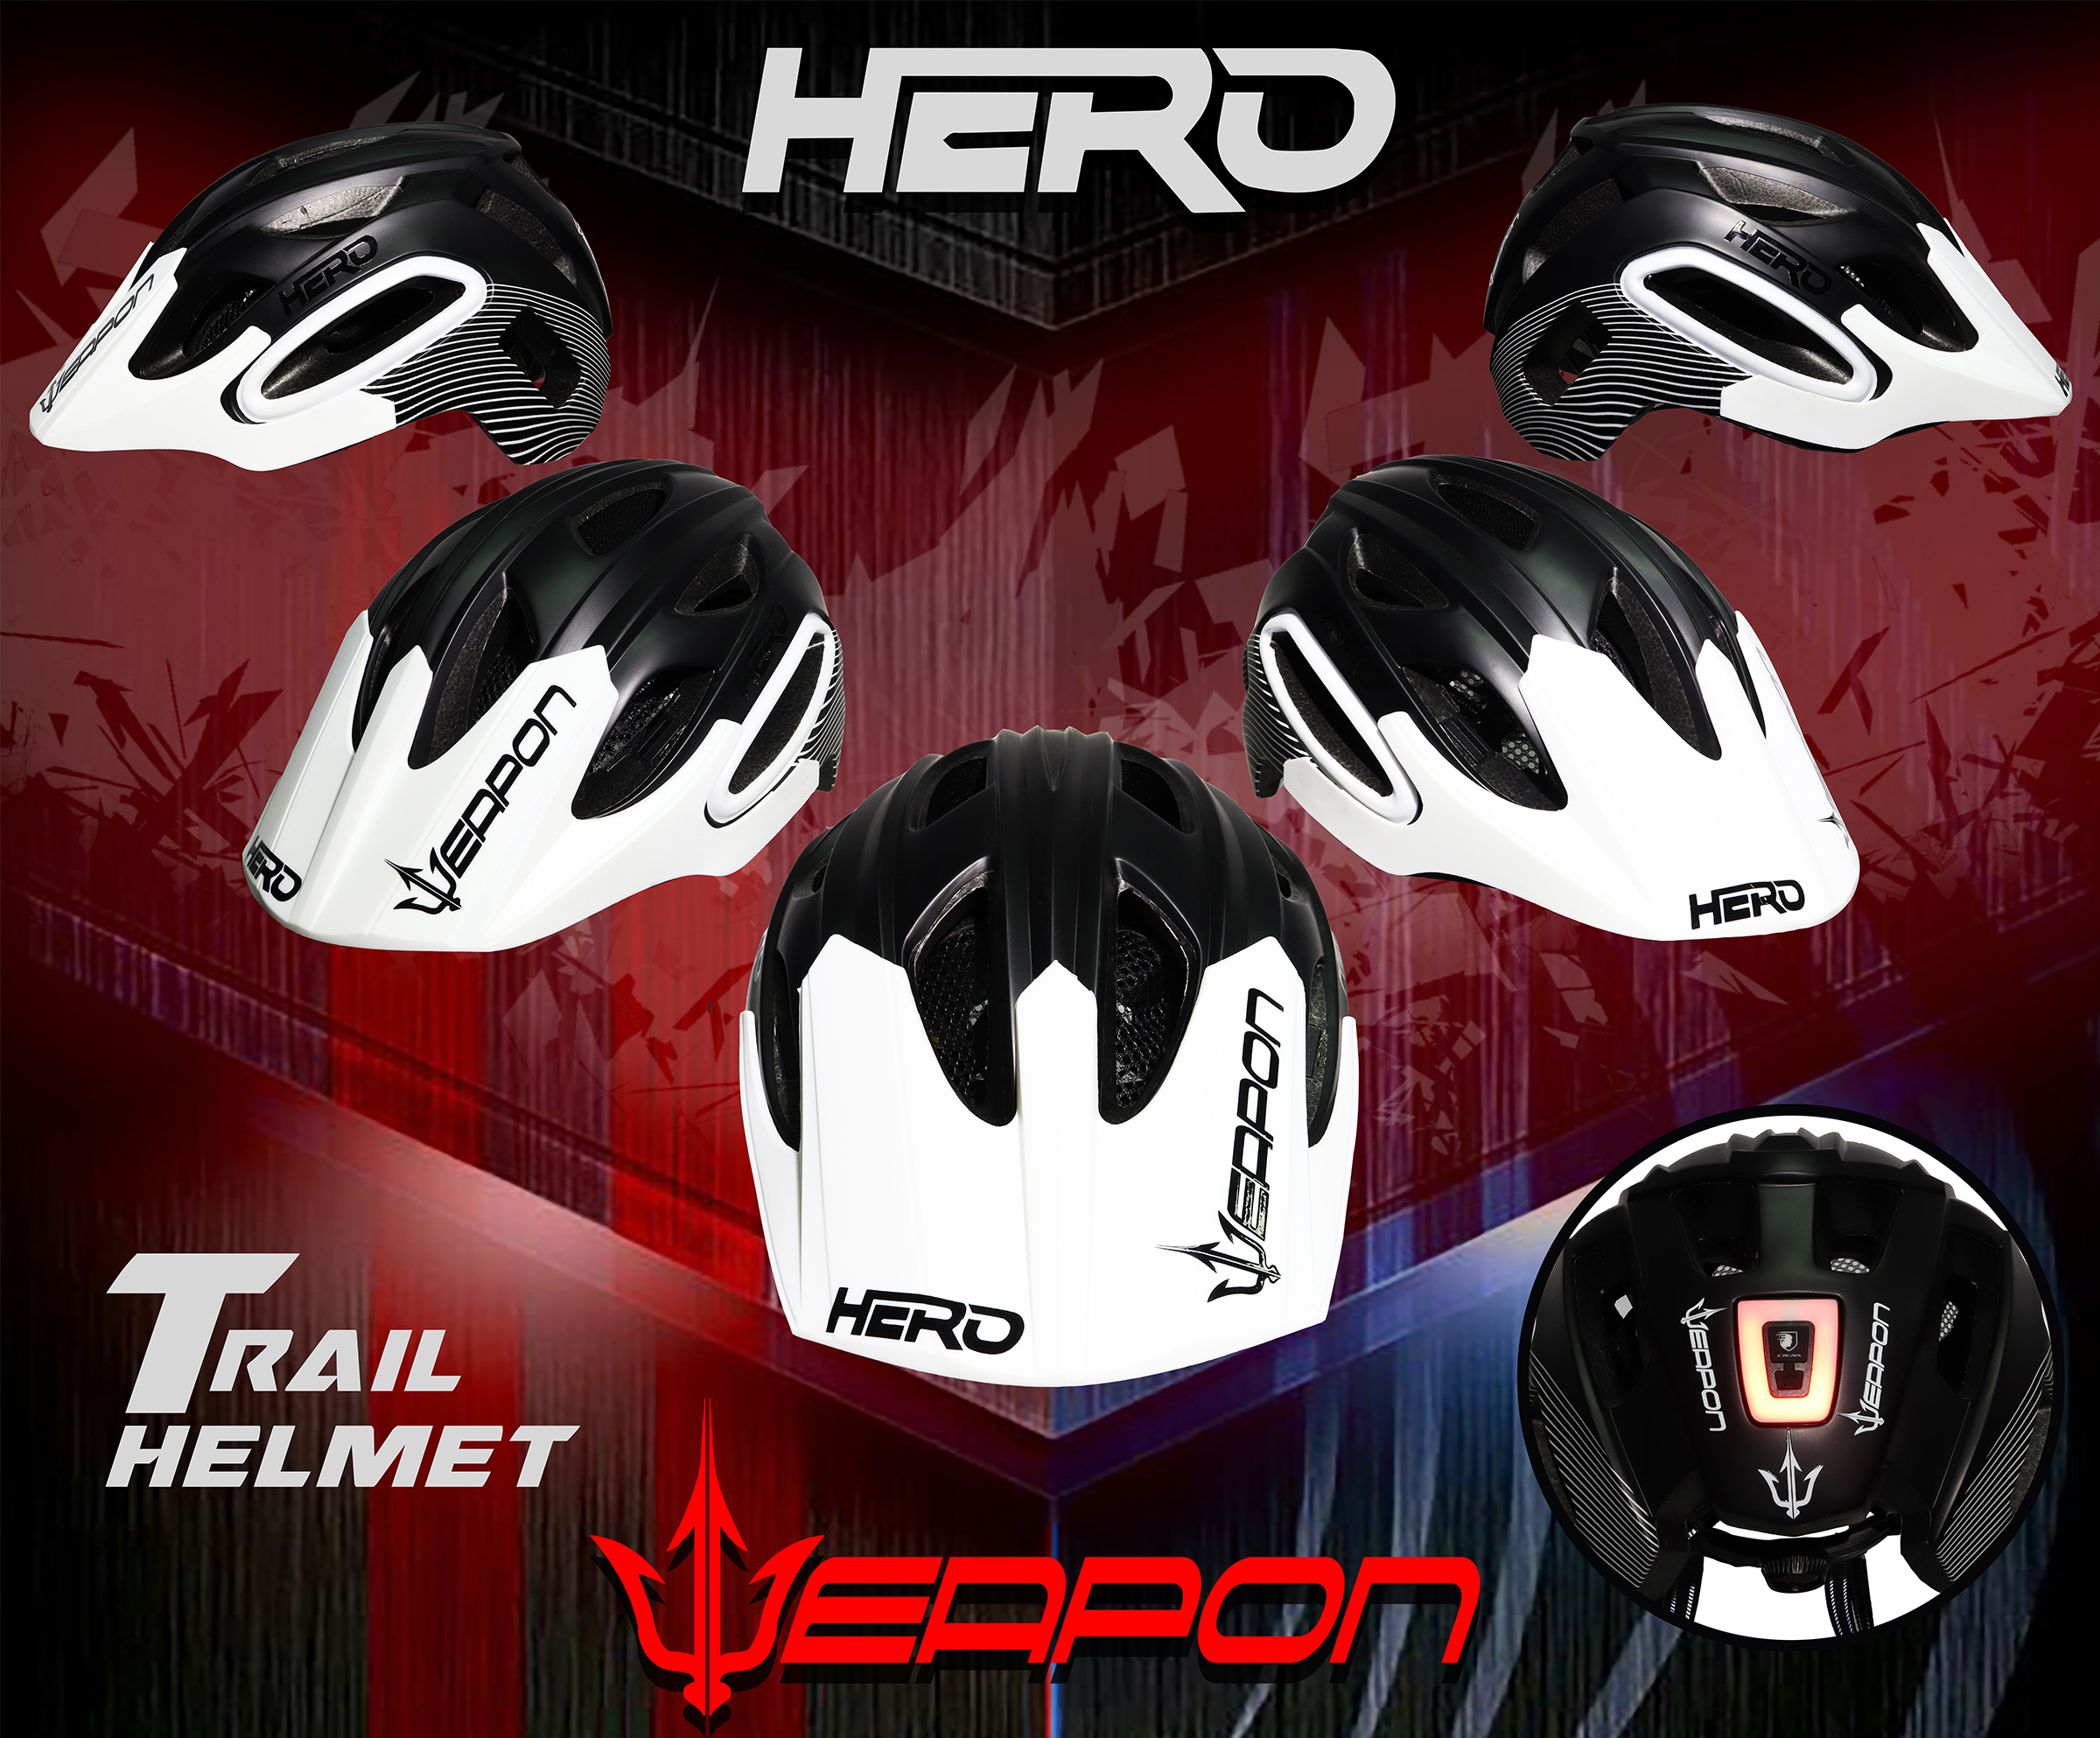 hero-helmet-ads3